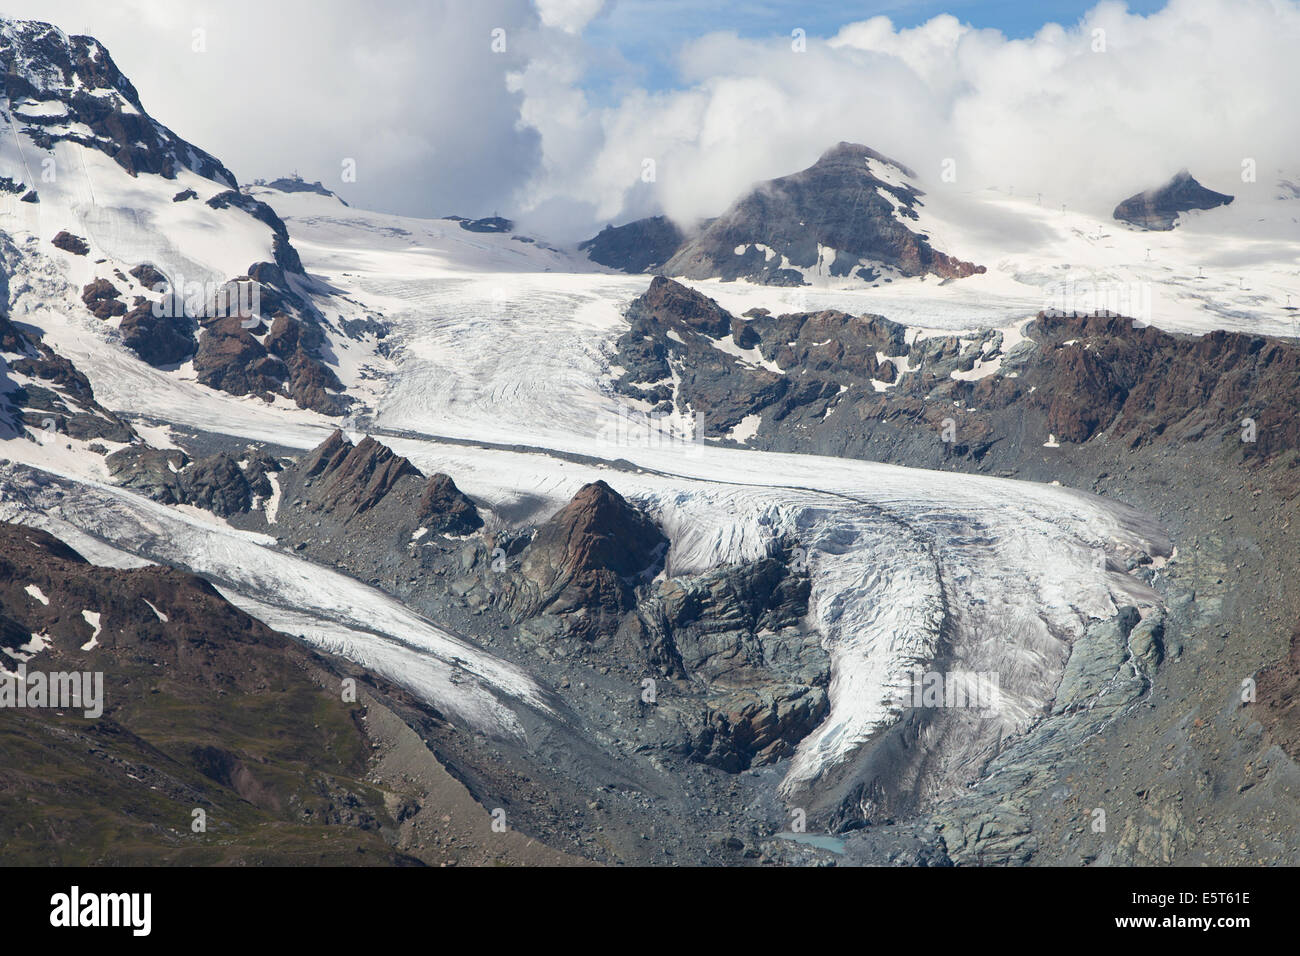 Theodul glacier in the Swiss Alps. Stock Photo